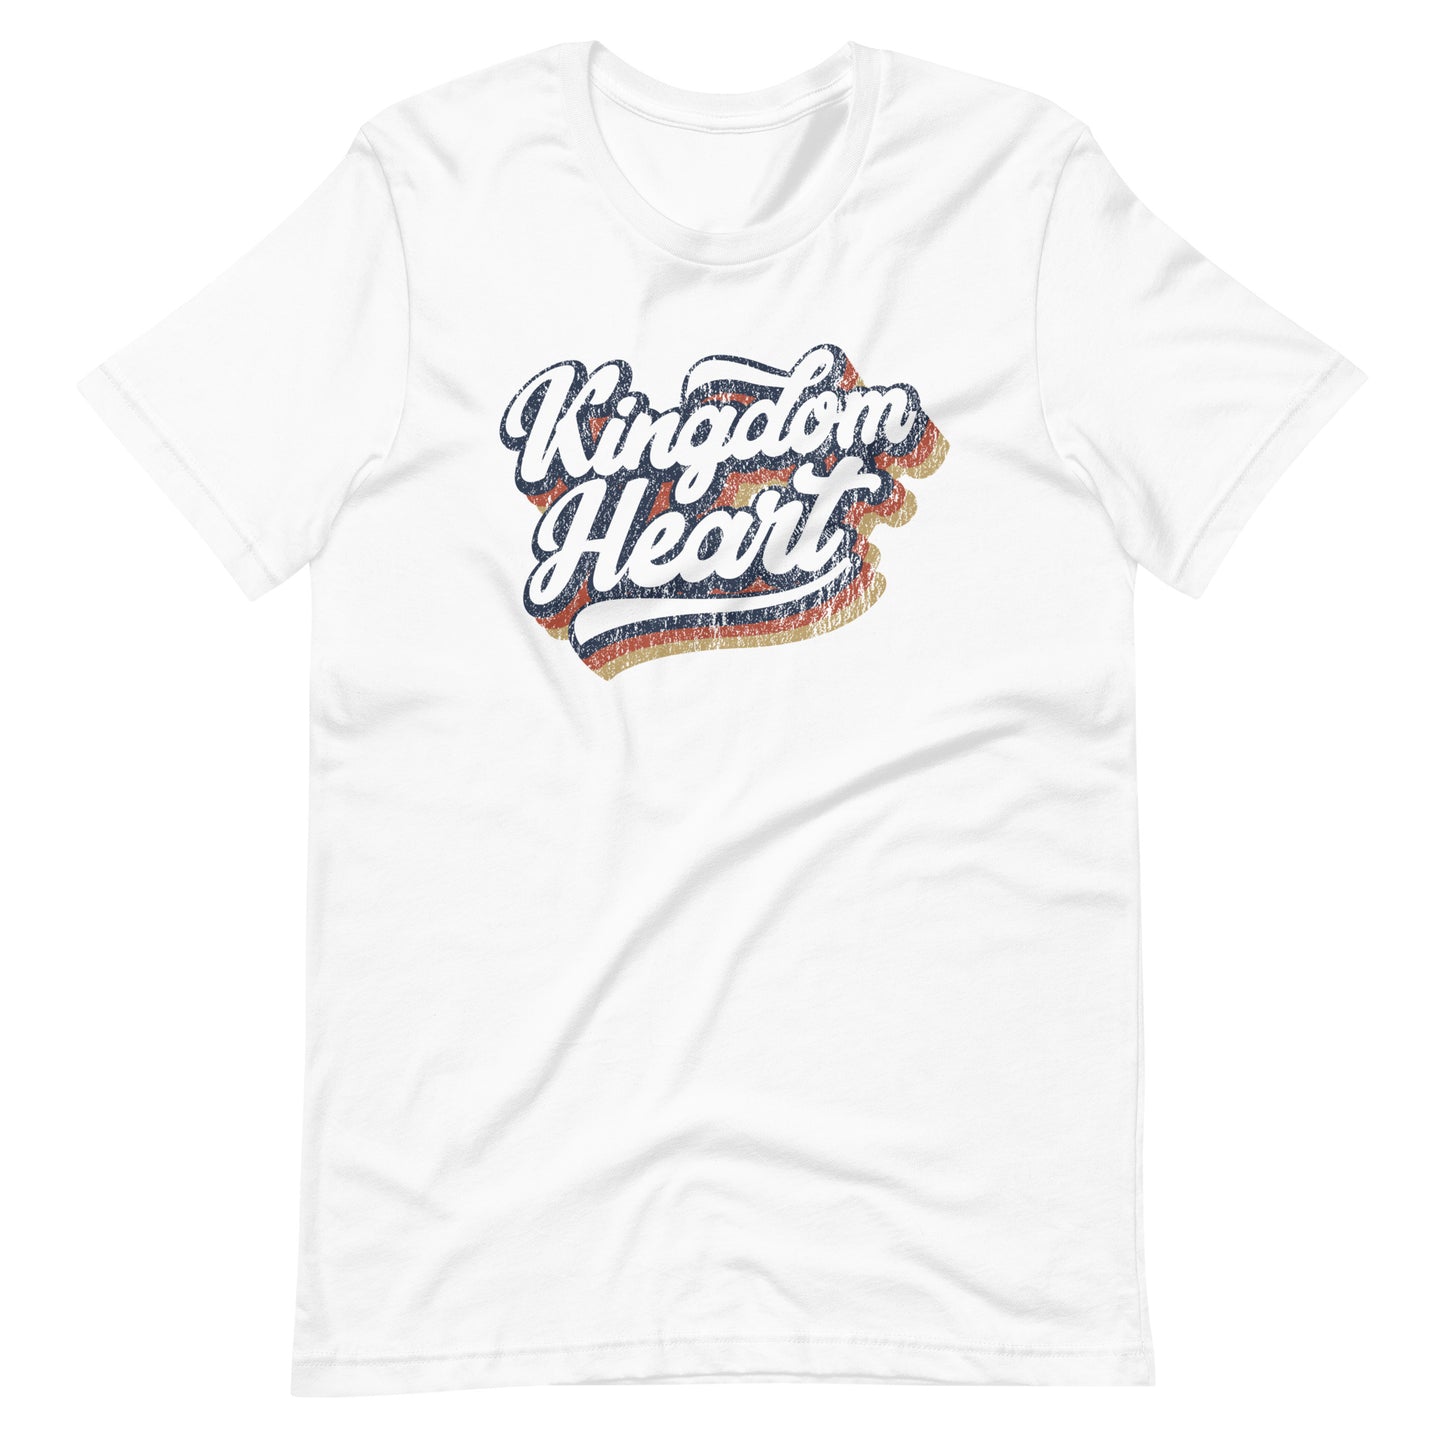 Kingdom Heart T-Shirt